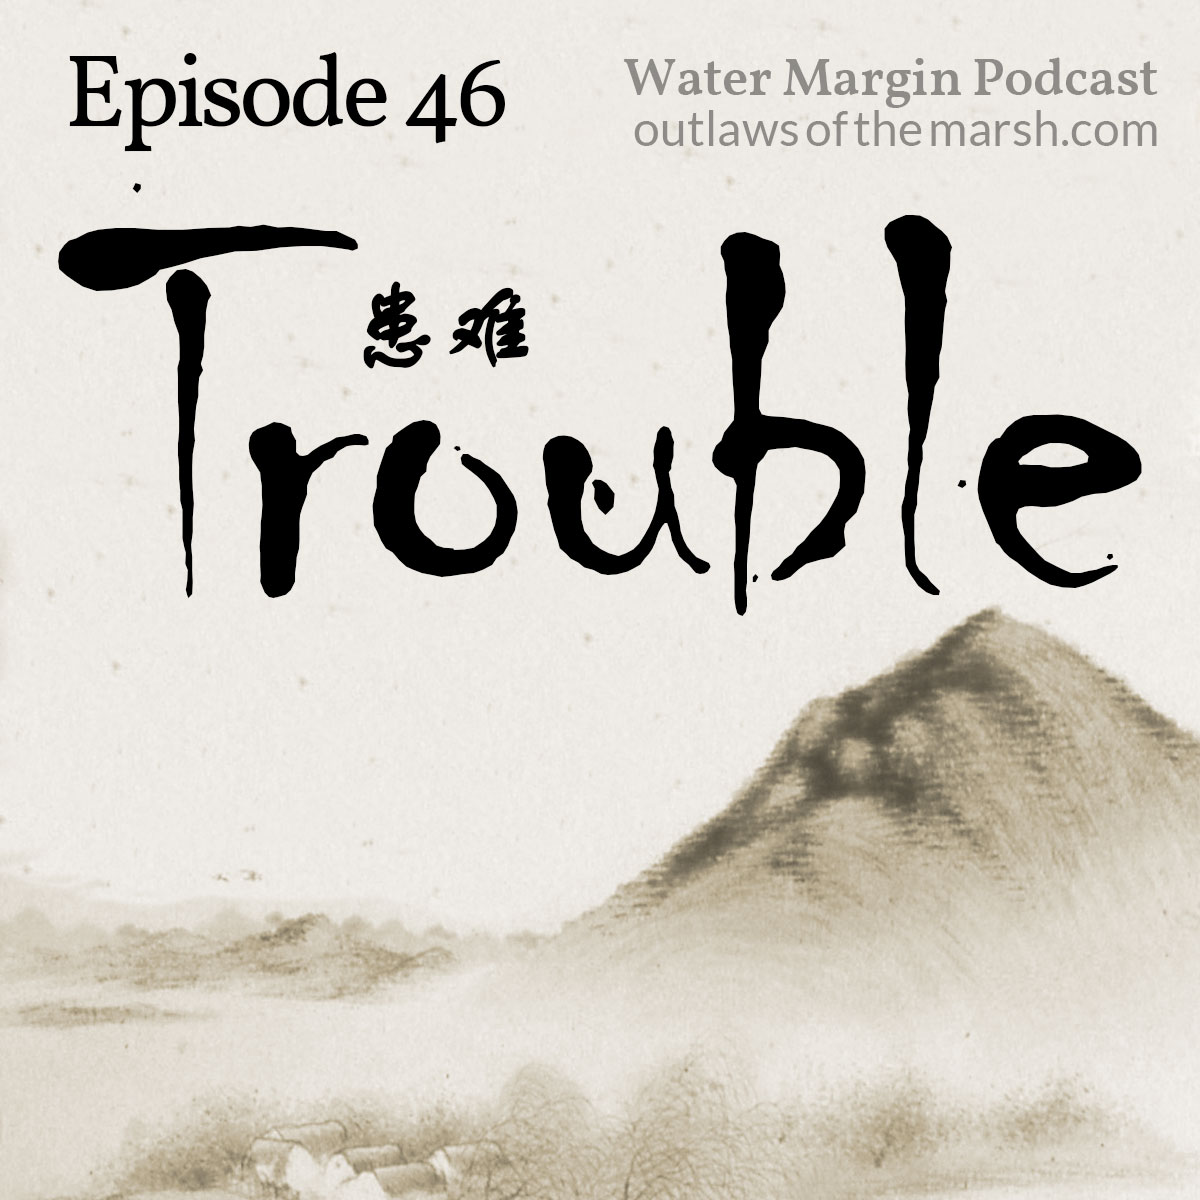 Water Margin Podcast: Episode 046